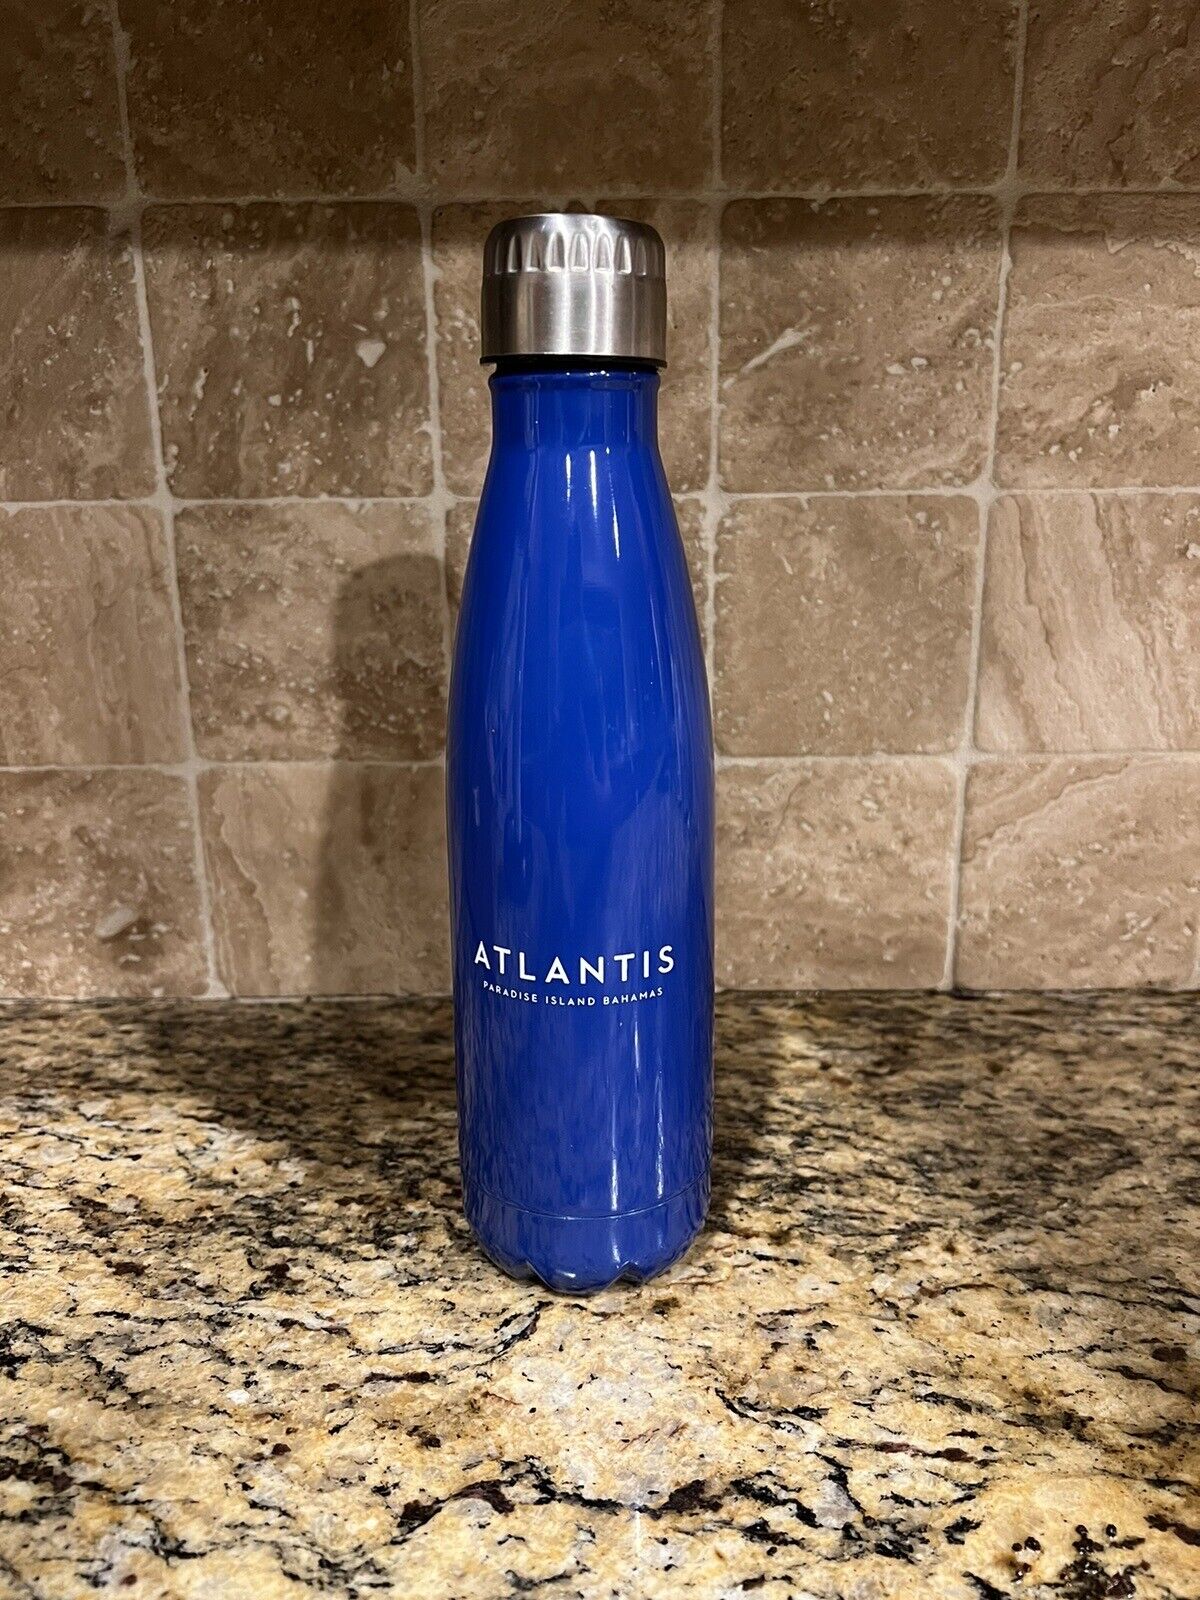 New Atlantis Bahamas Metal Water Bottle Blue Project Foundation Paradise Island